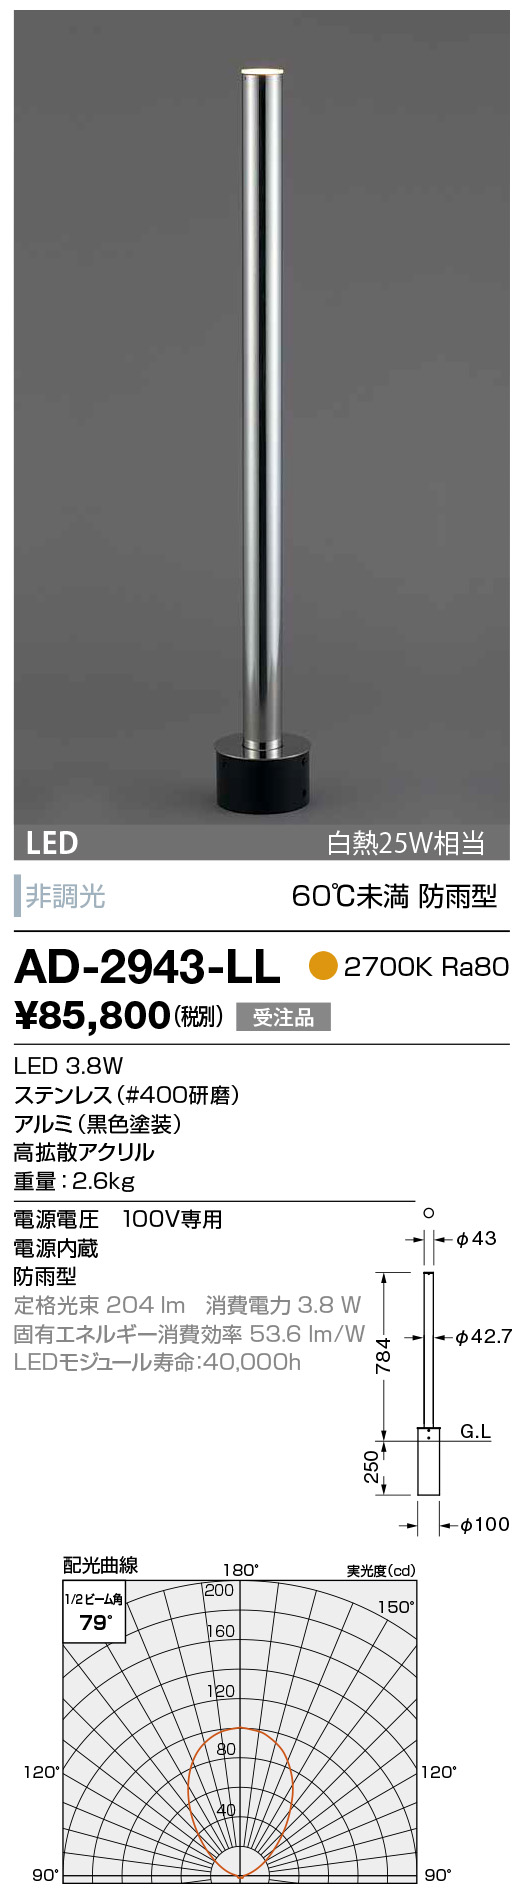 AD-2943-LL(山田照明) 商品詳細 ～ 照明器具・換気扇他、電設資材販売のブライト